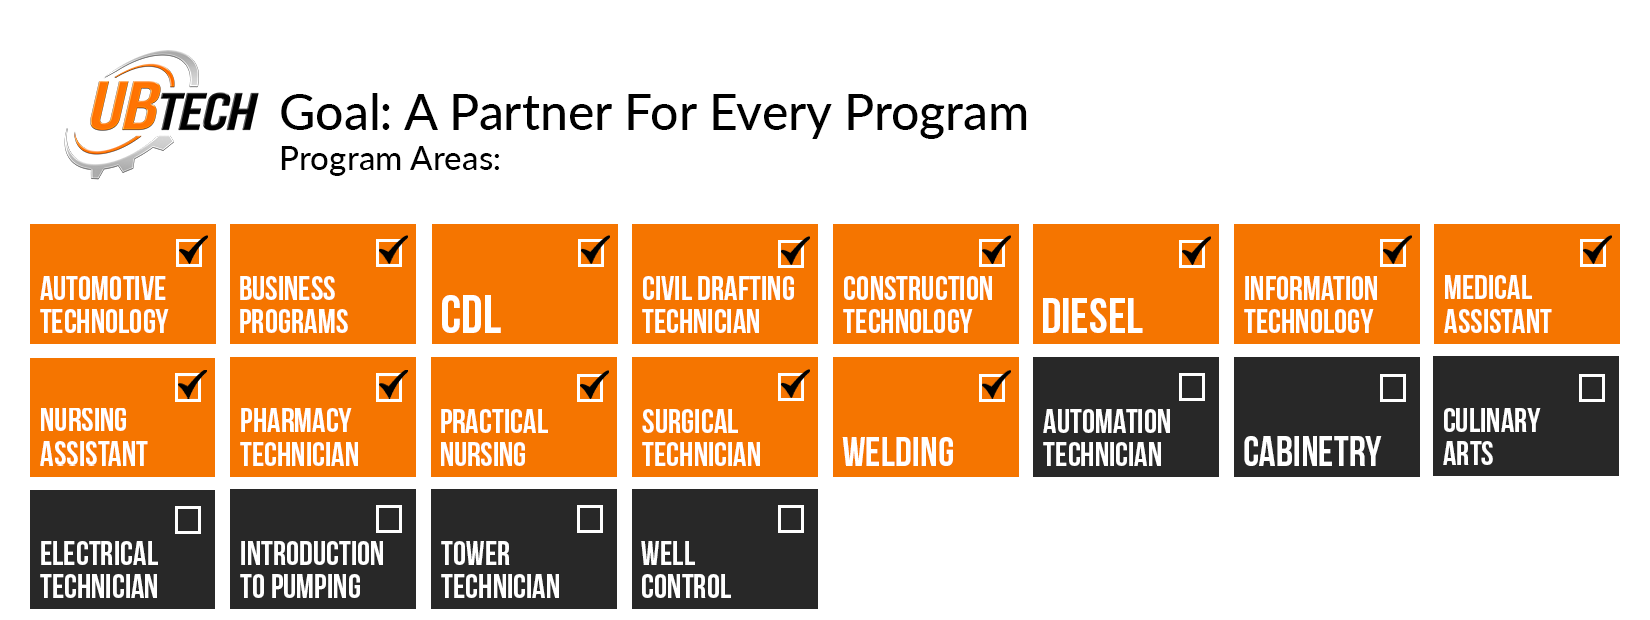 A partner for every program!